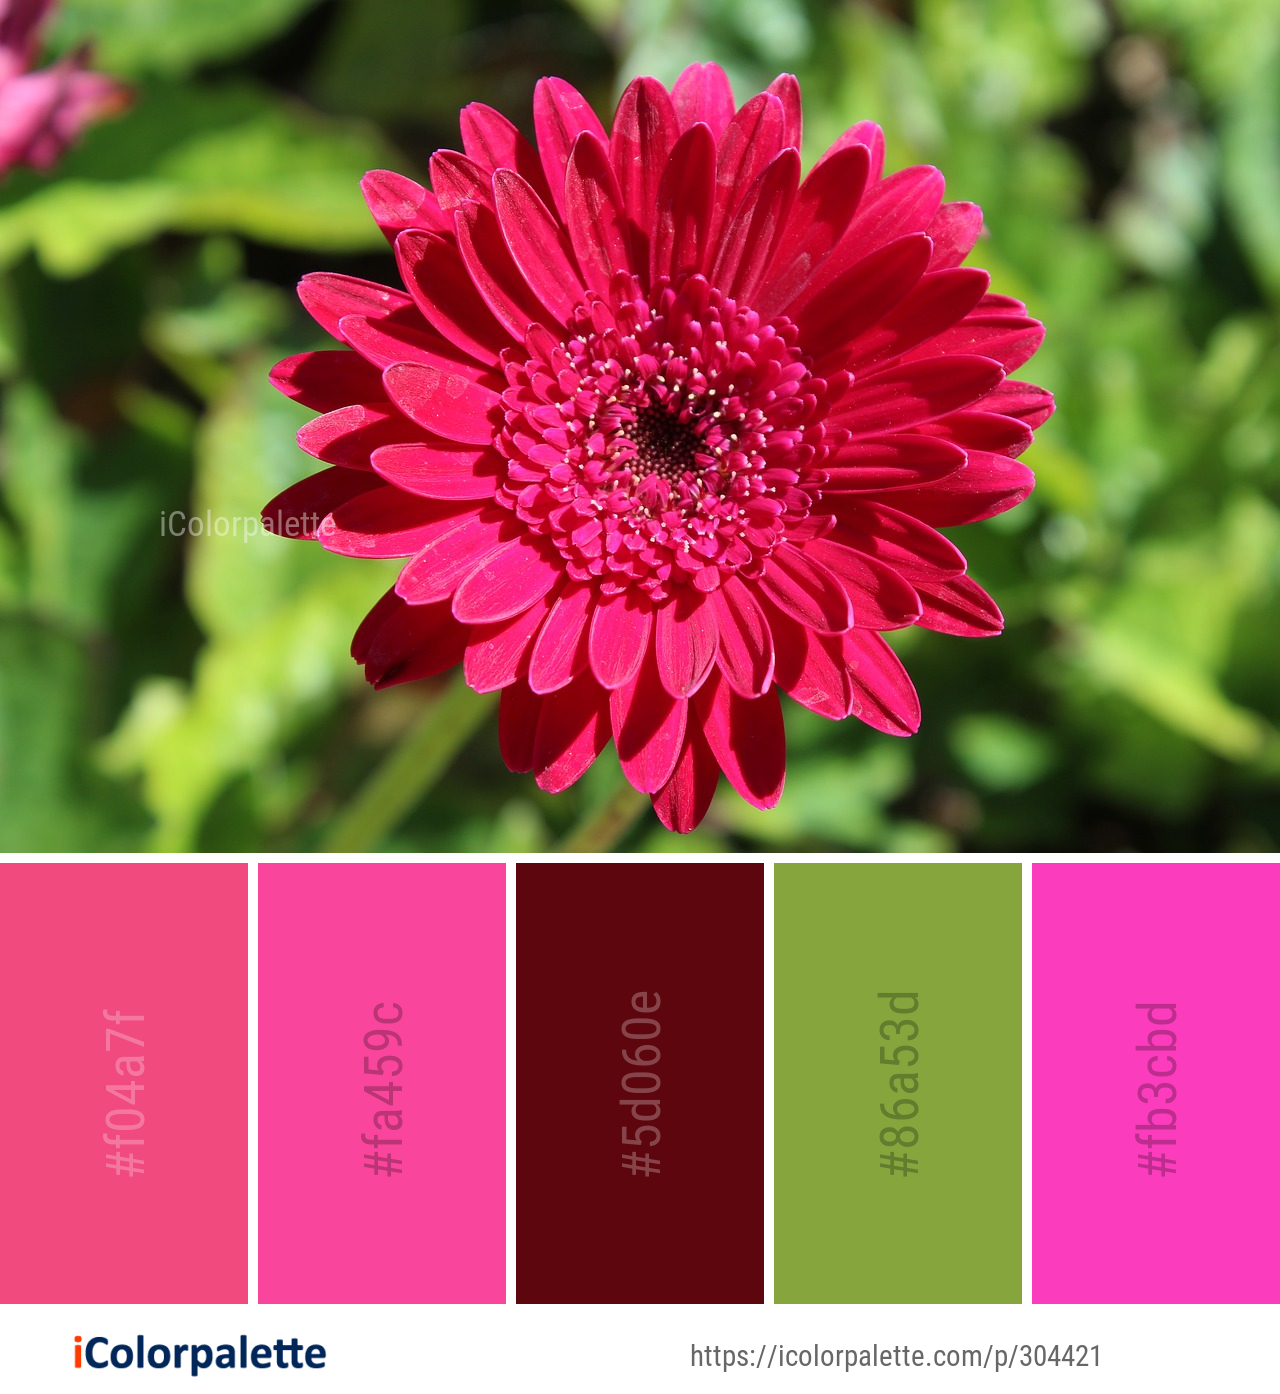 Color Palette Ideas from Flower Flora Plant Image | iColorpalette